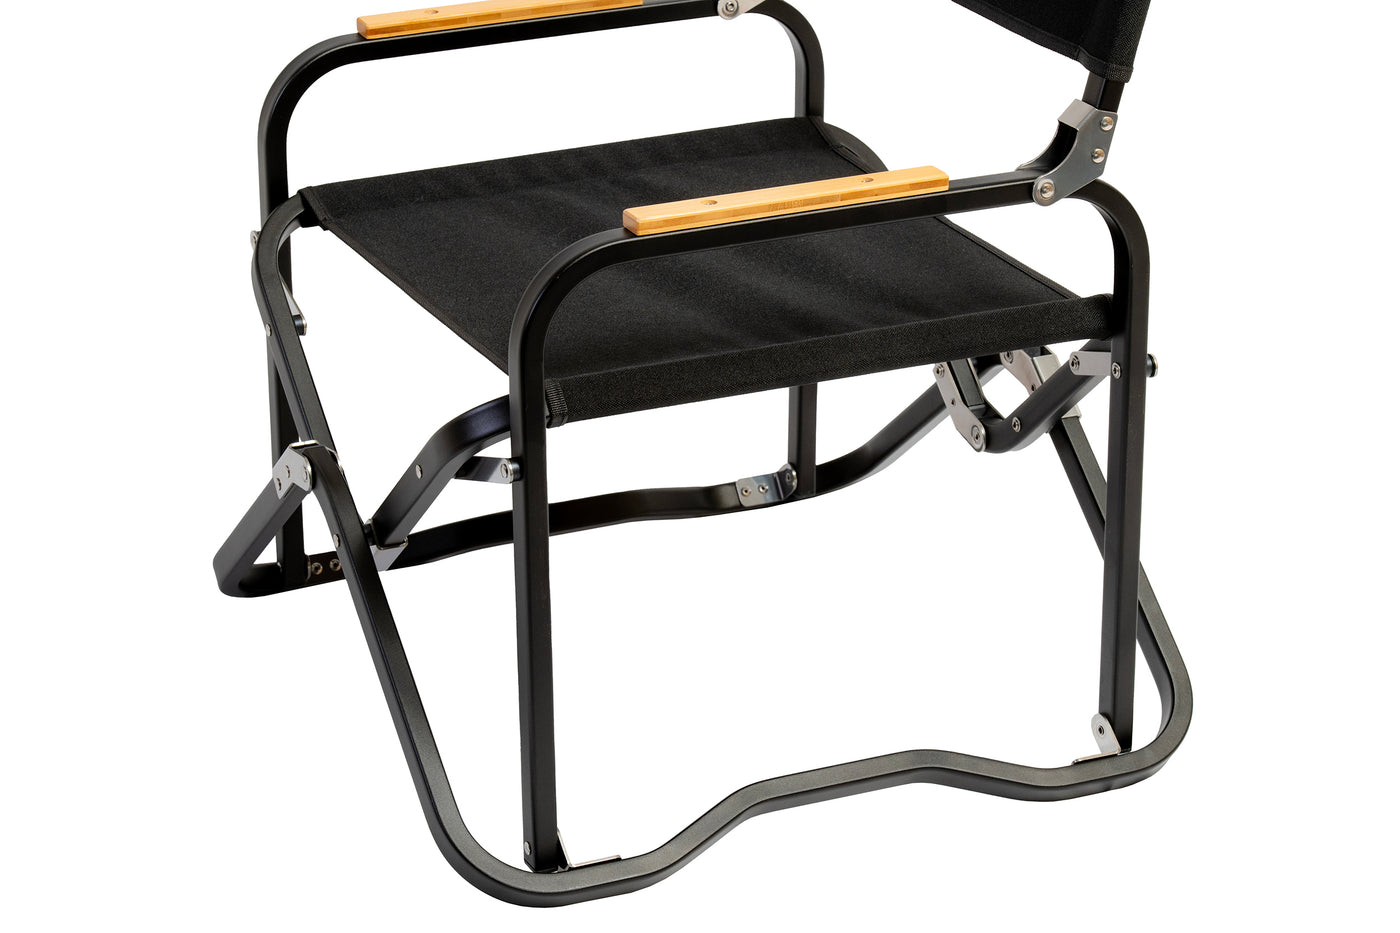 sleek modern chair